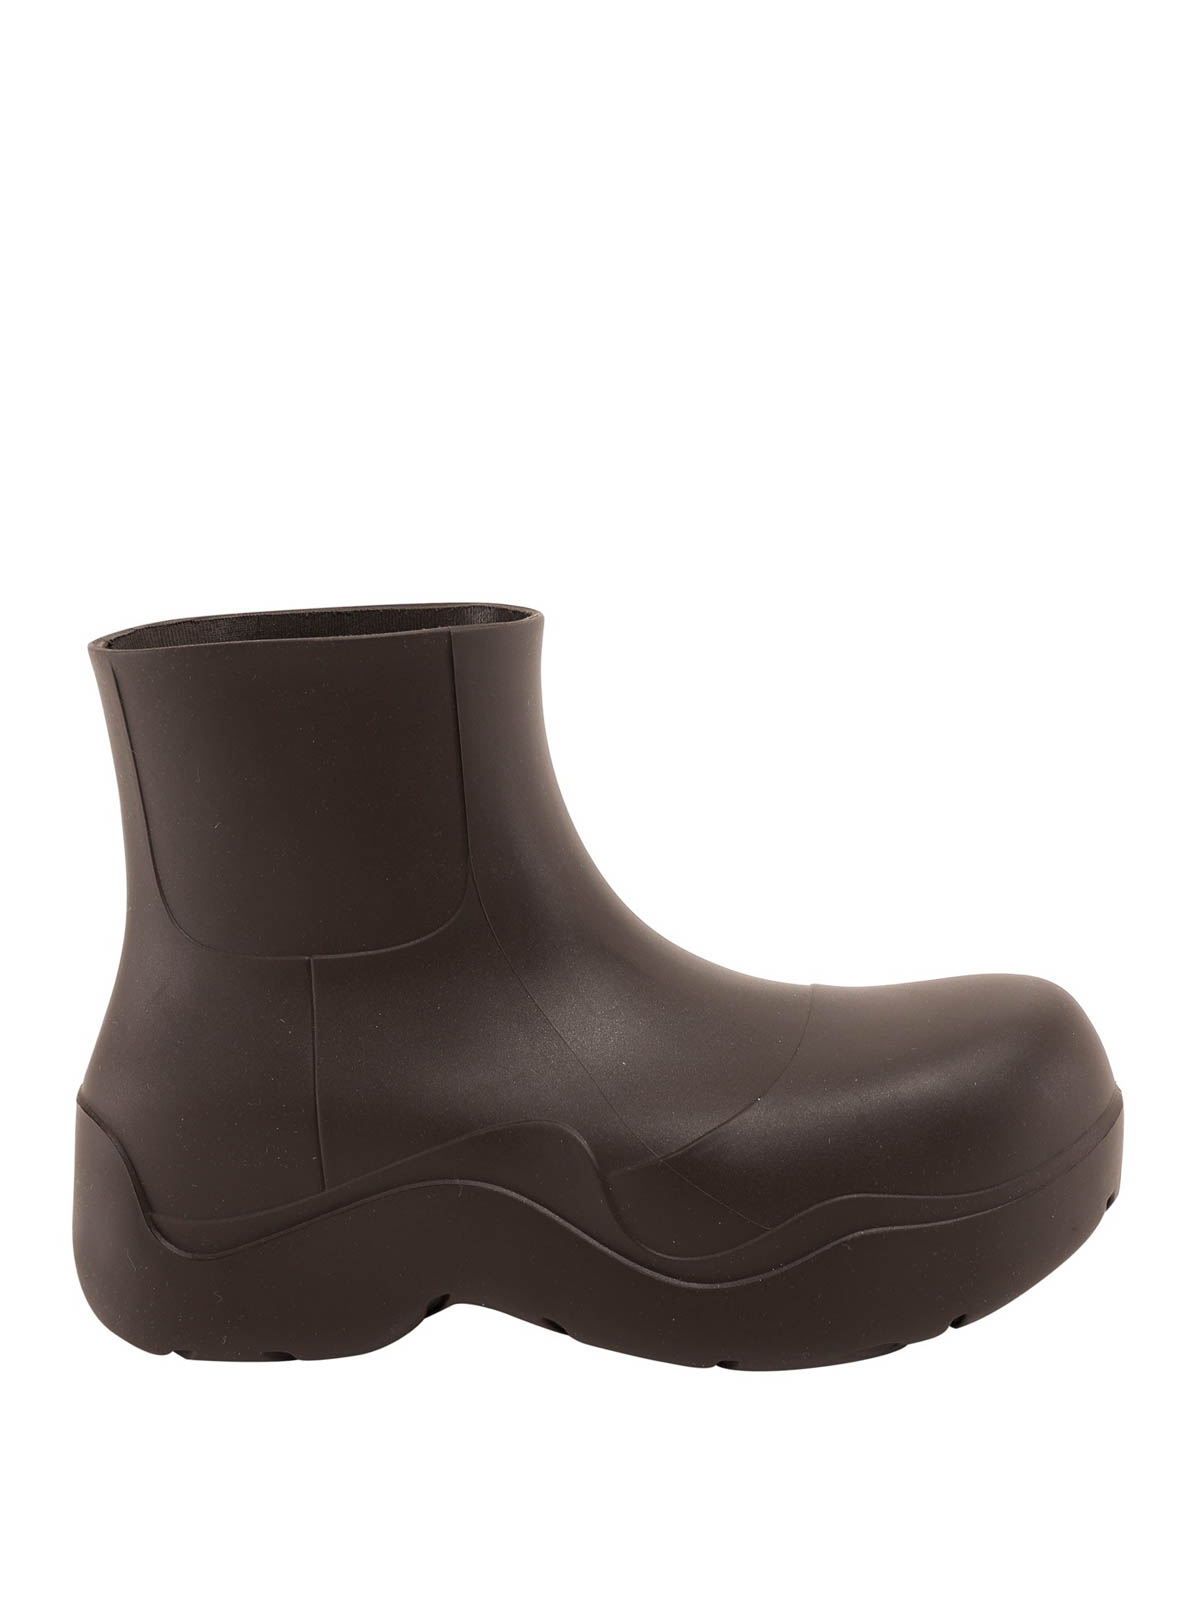 Bottega Veneta The Puddle Ankle Boots In Dark Brown